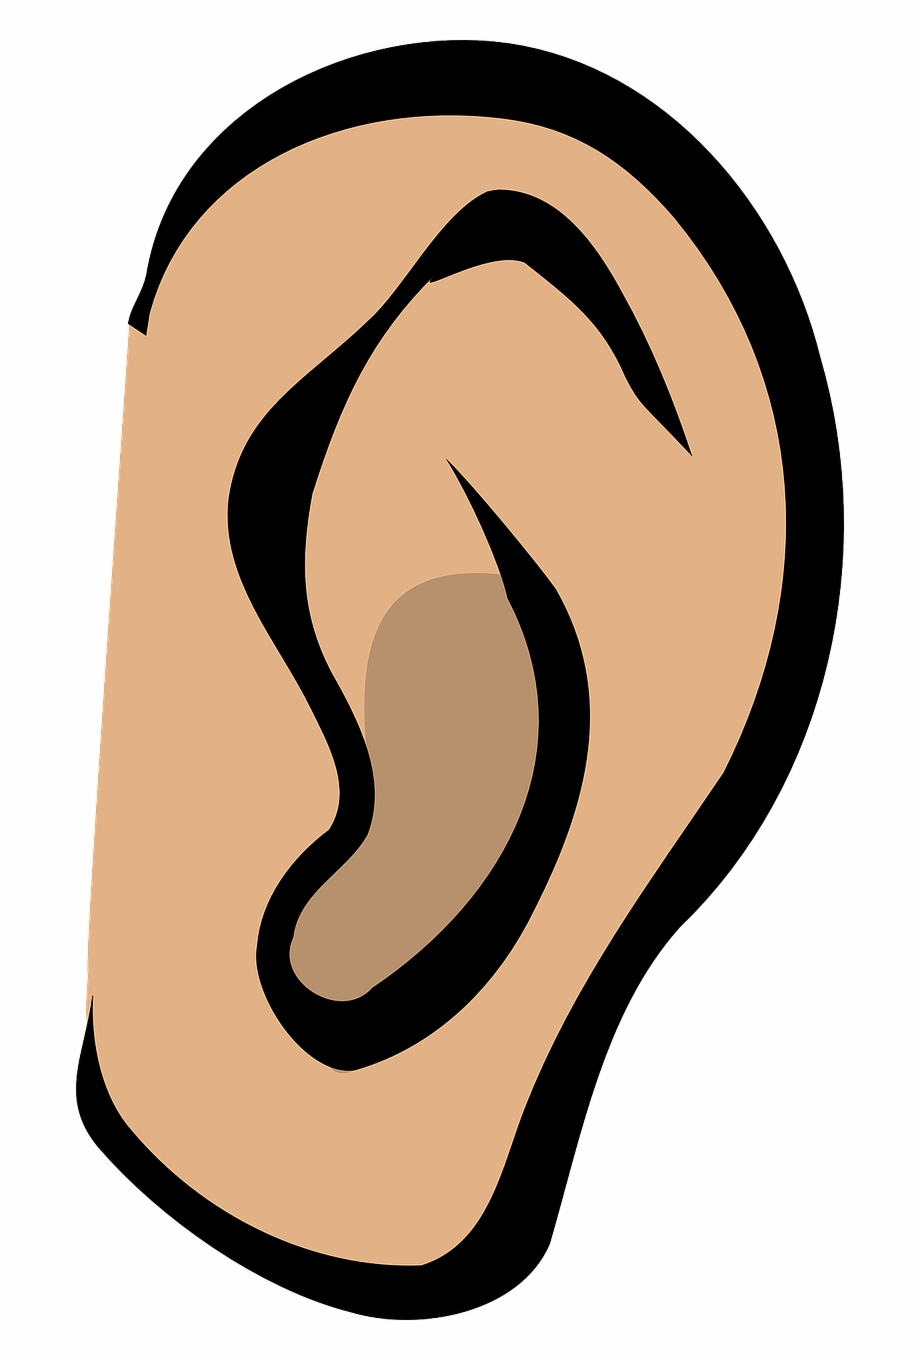 hearing music clipart